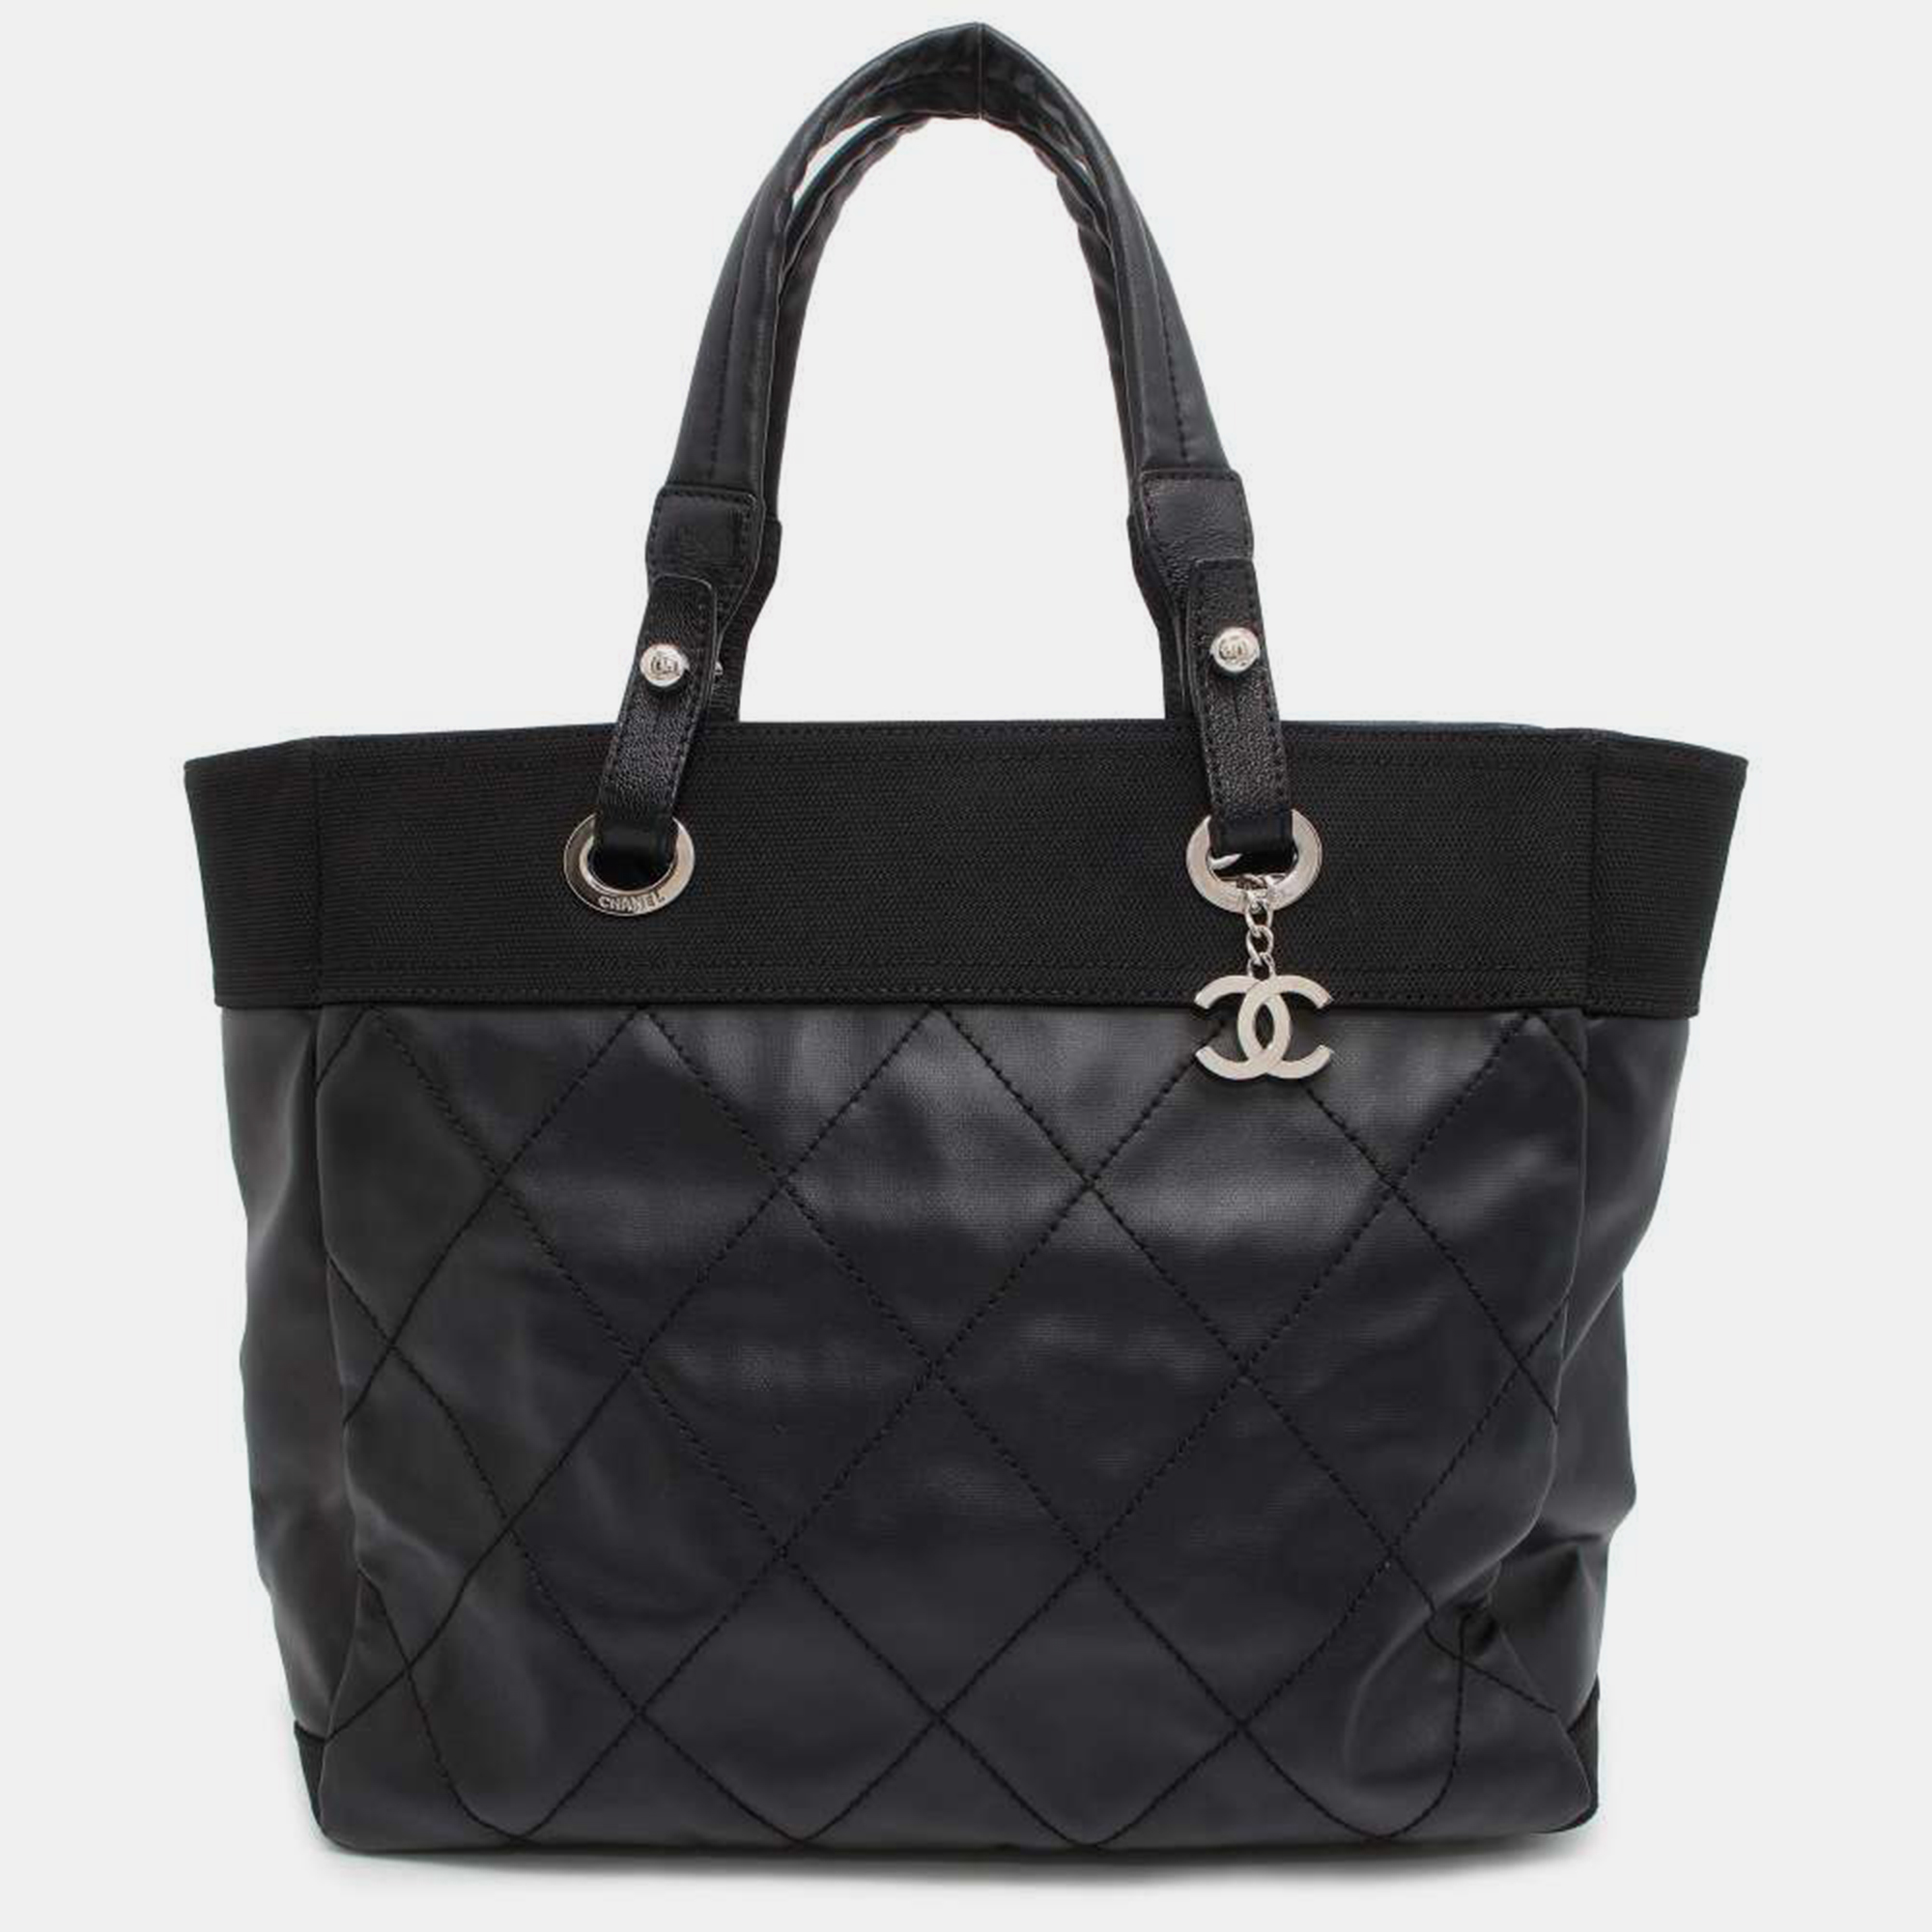 

Chanel Black Leather Paris-Biarritz MM Tote Bag